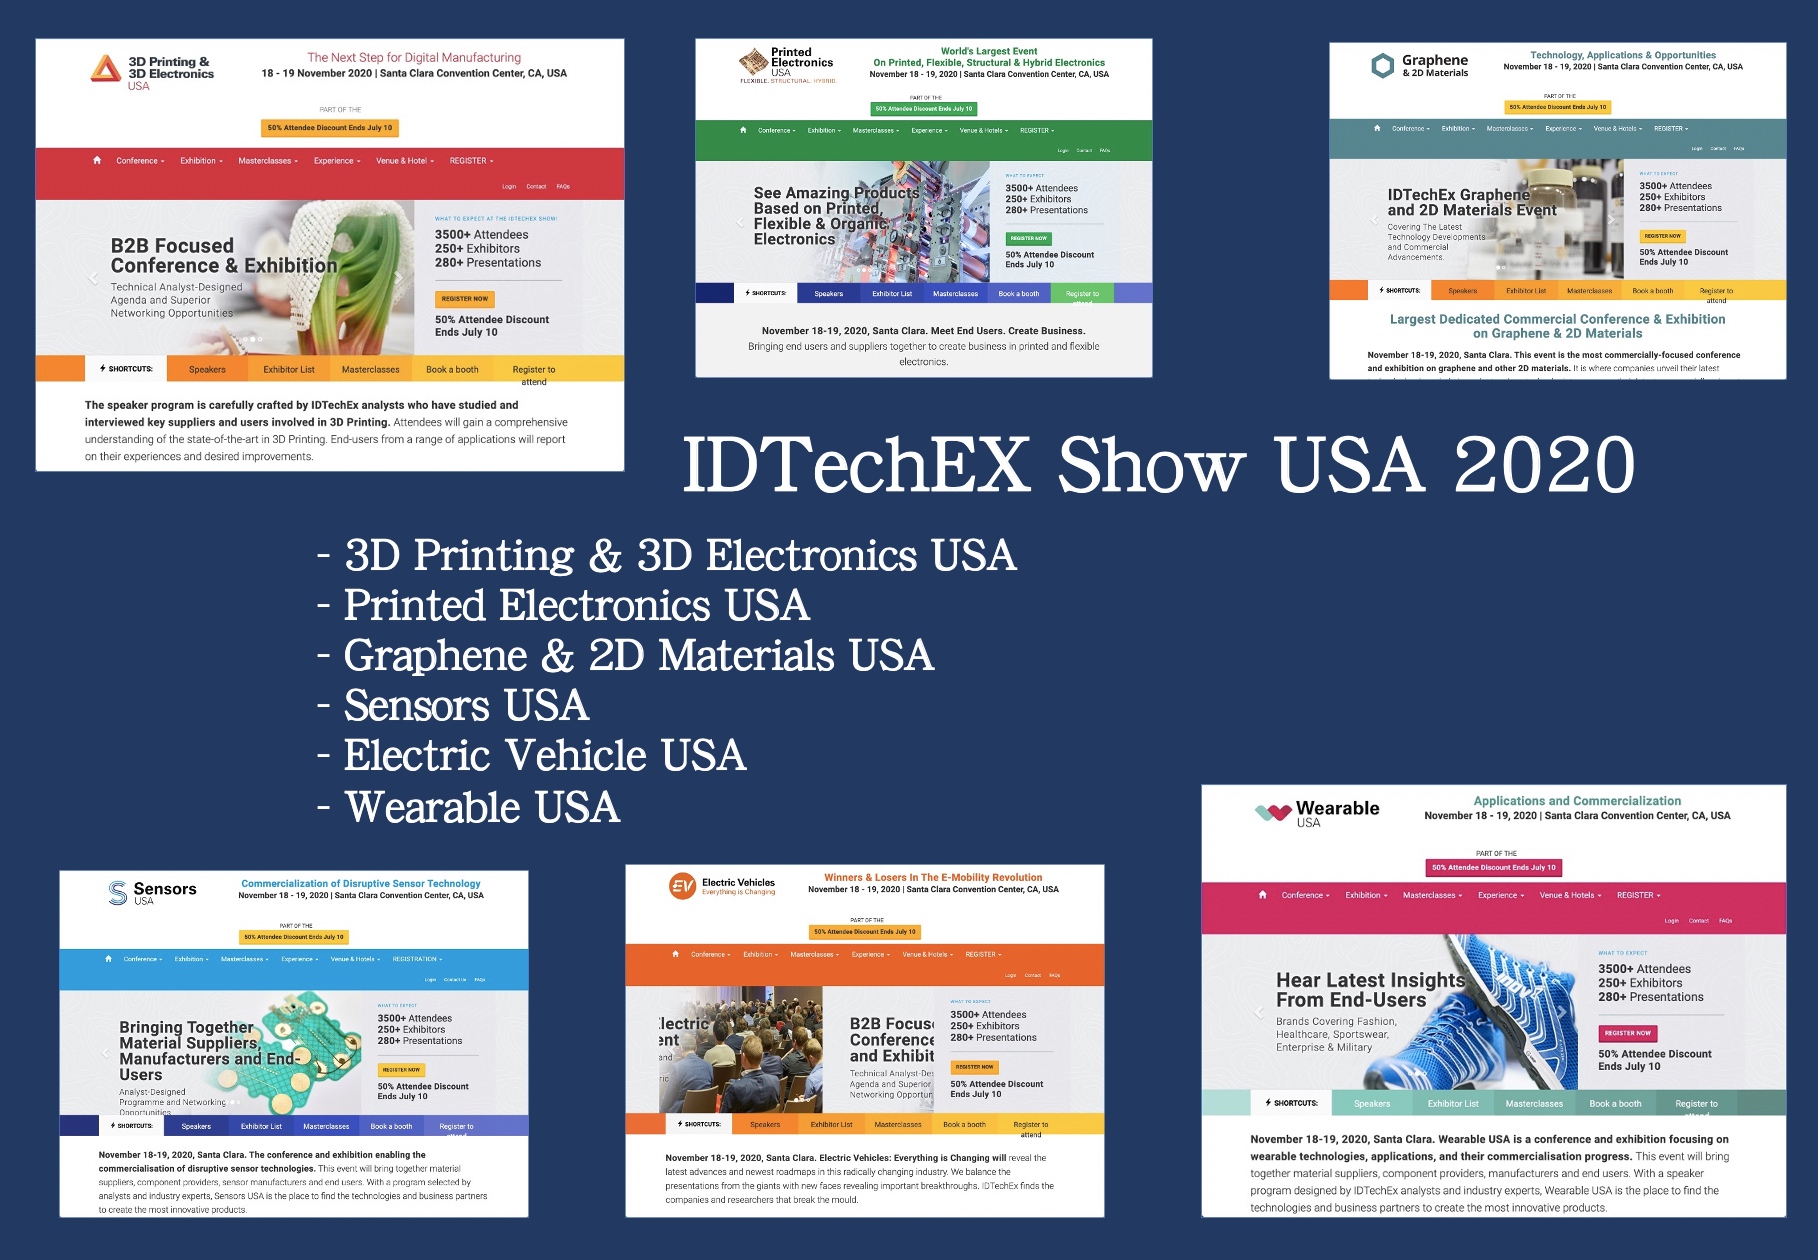 IDTechEX Show USA